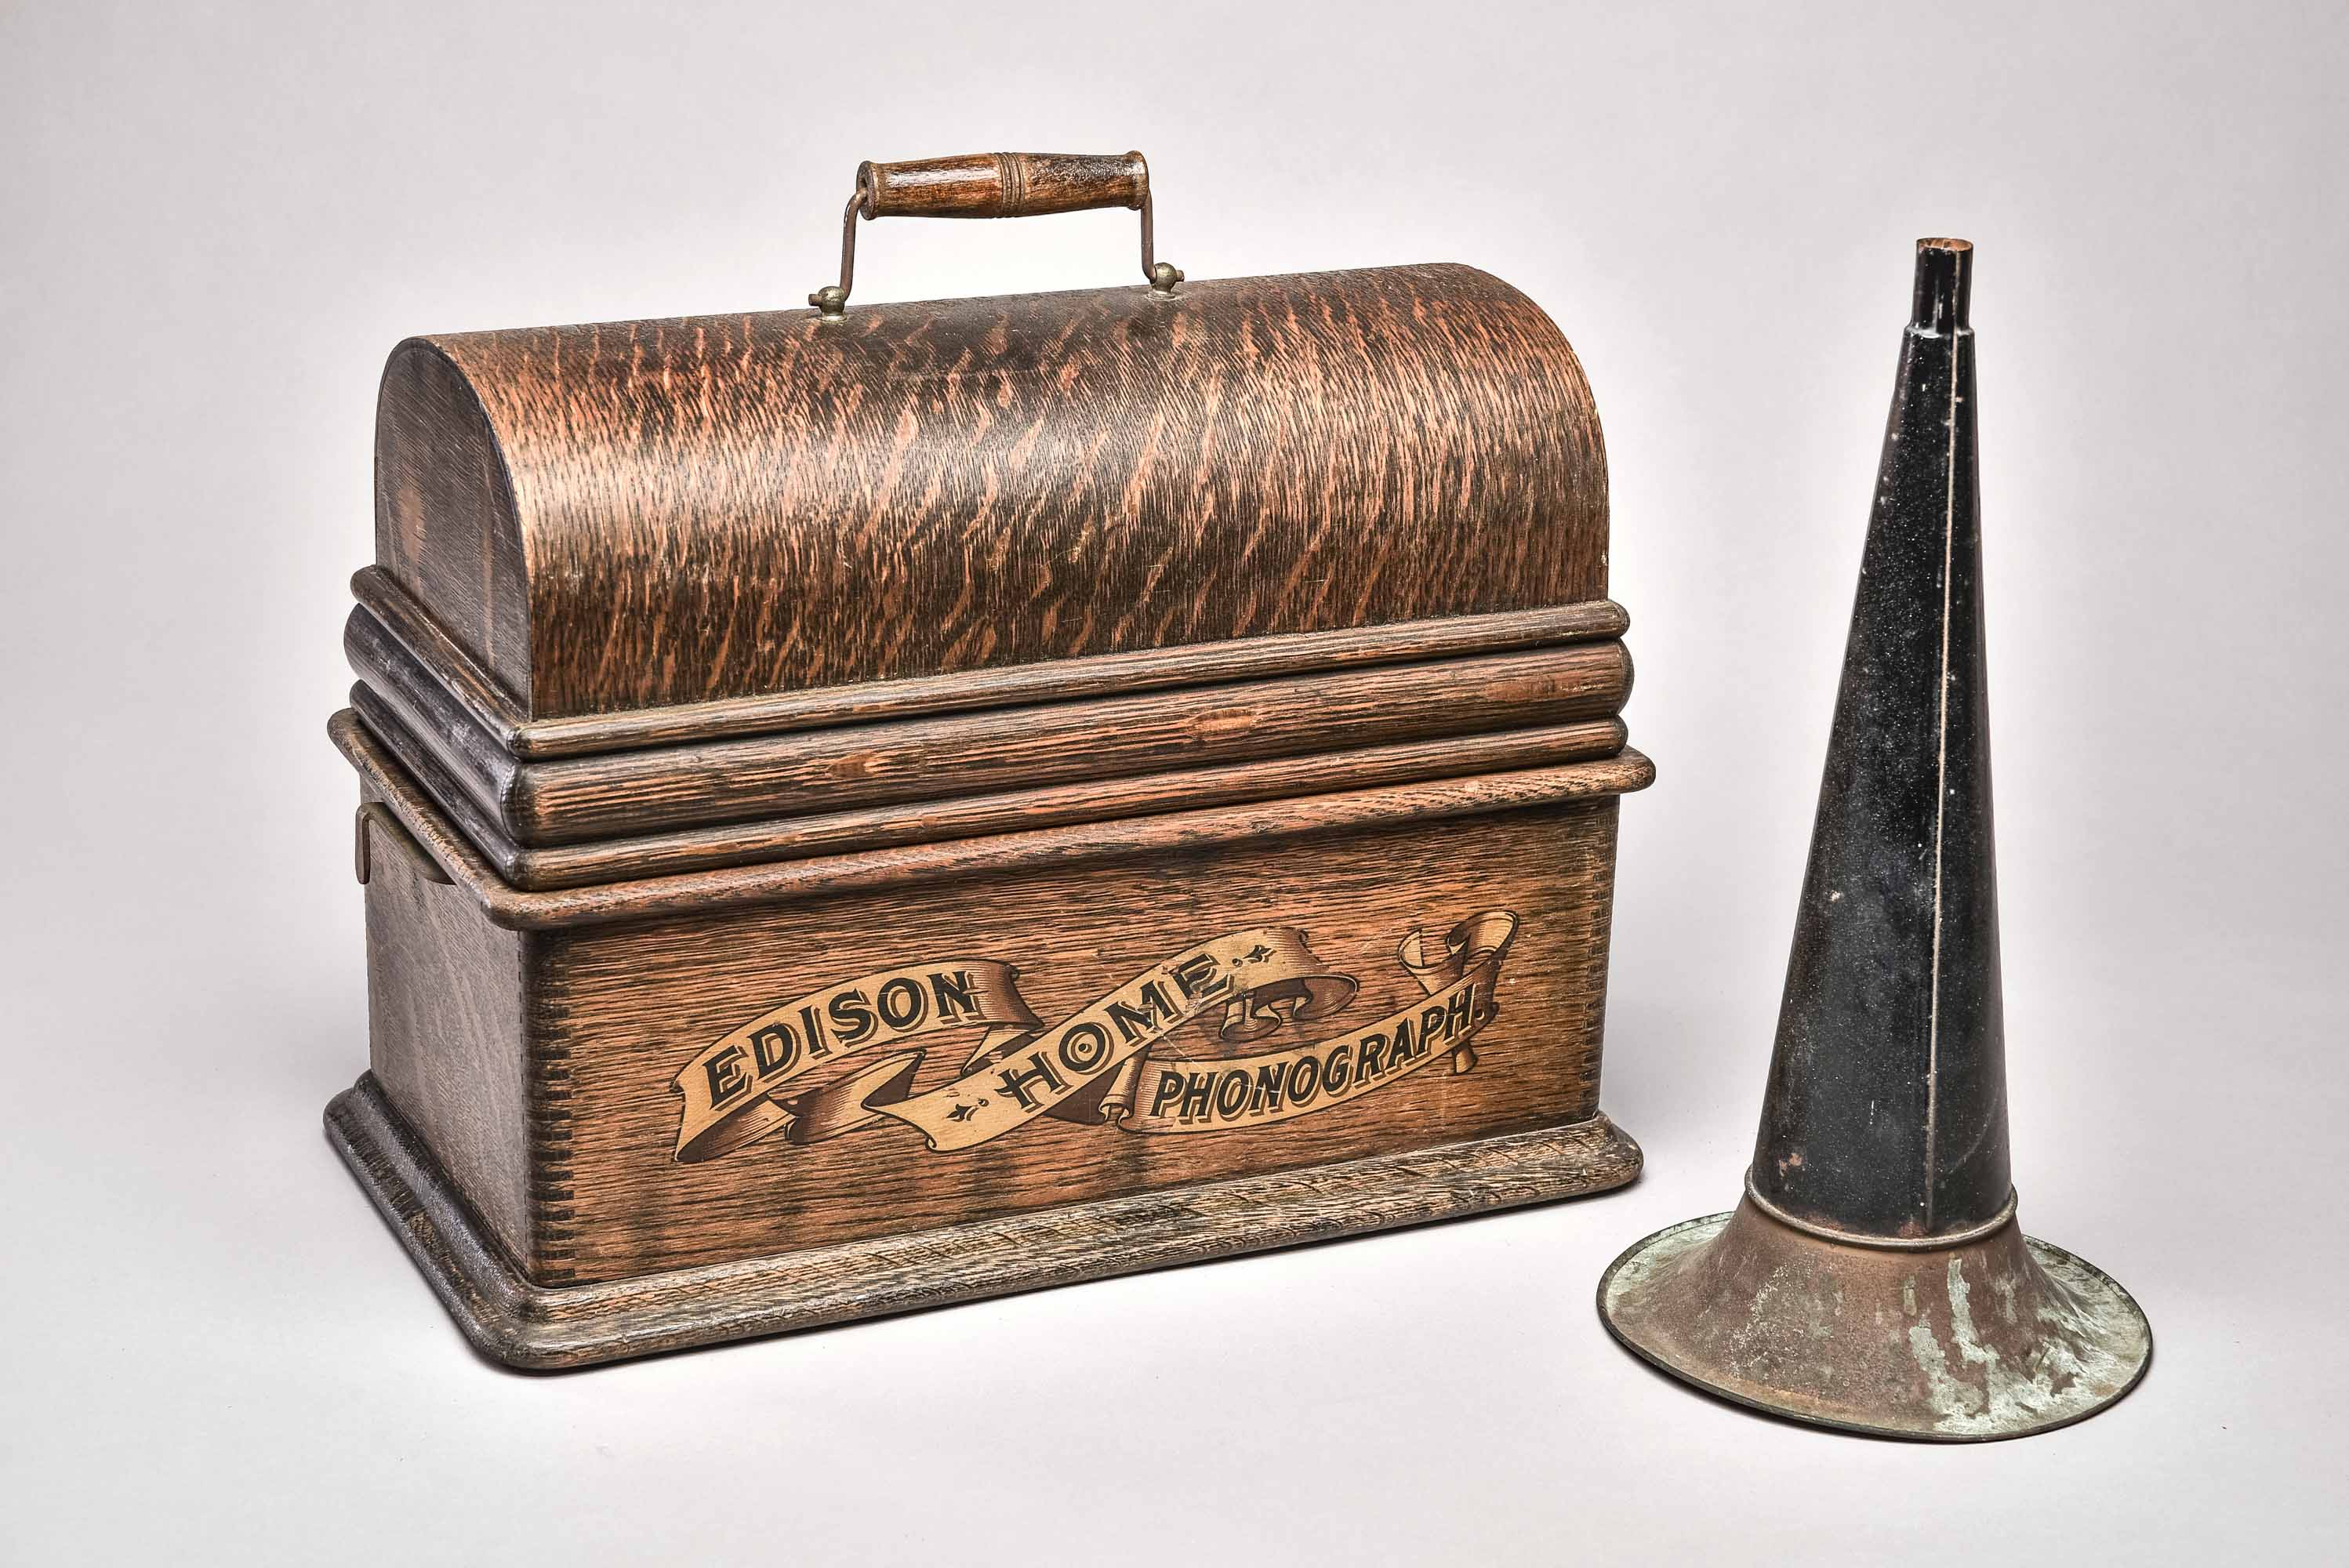 Original Edison phonograph, USA around 1900, cylinder phonograph, model "Standard", with original f - Image 9 of 9